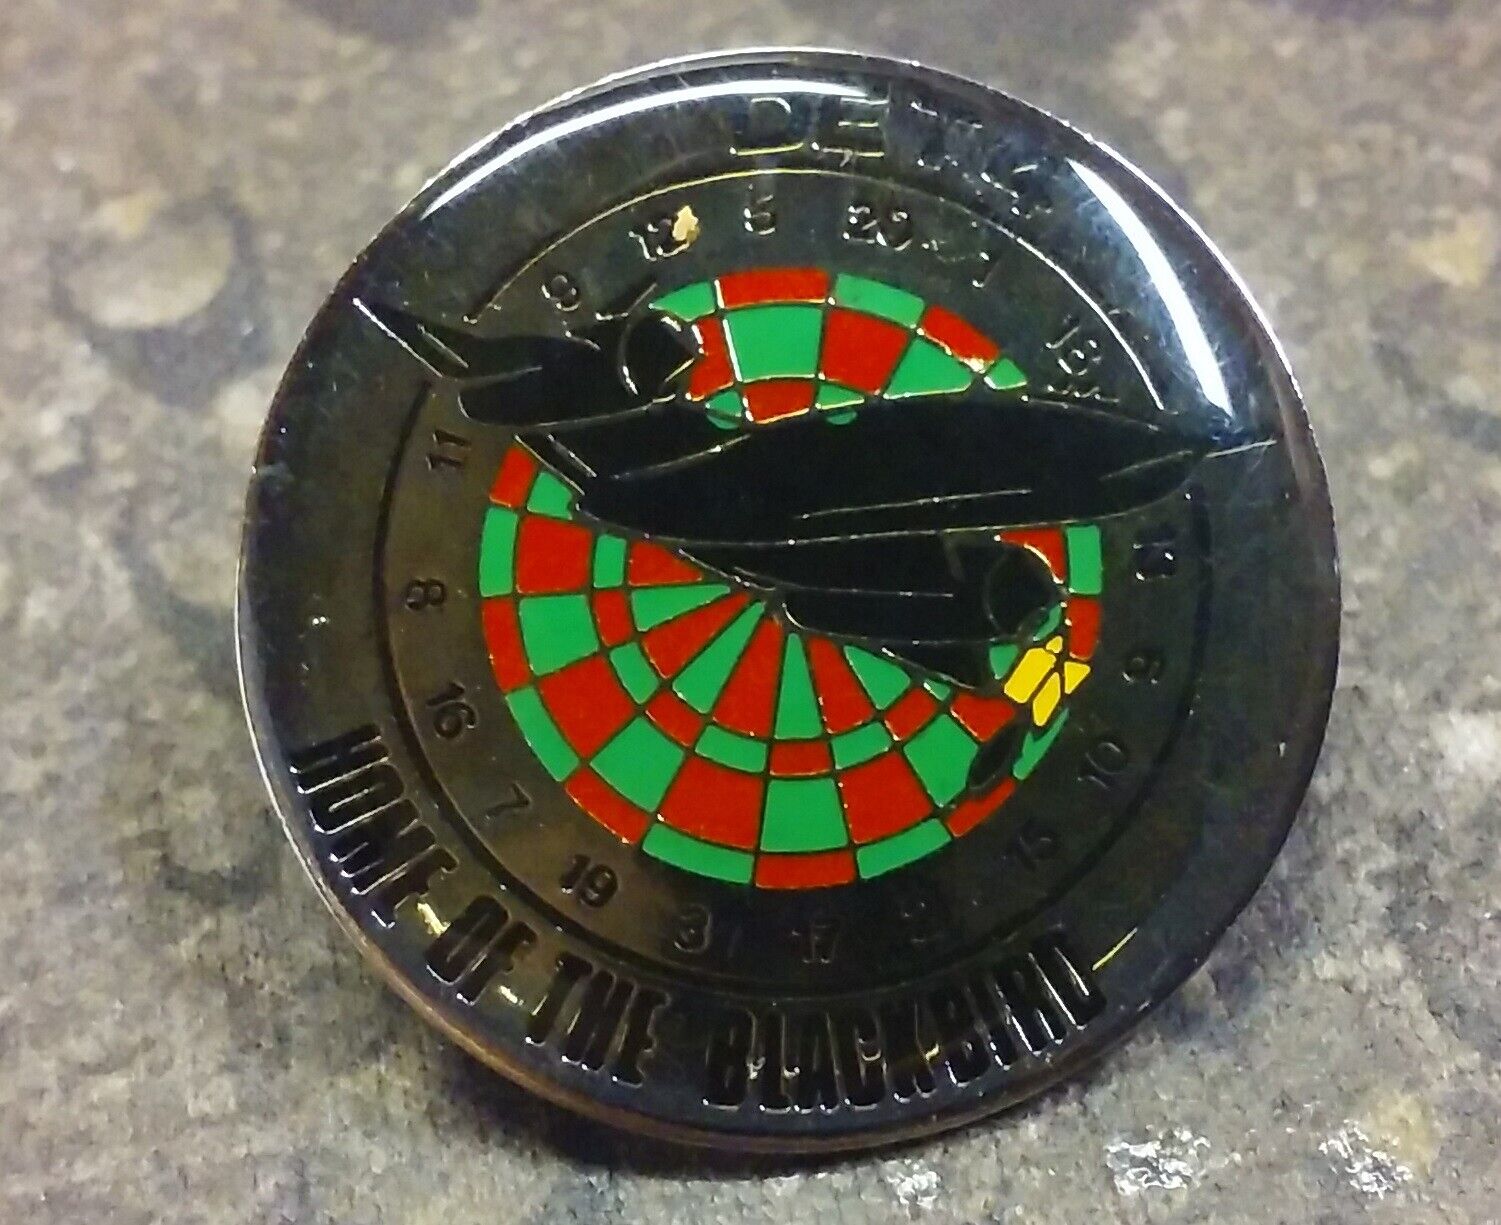 Home of the SR-71 BLACKBIRD DET 4 vintage pin badge